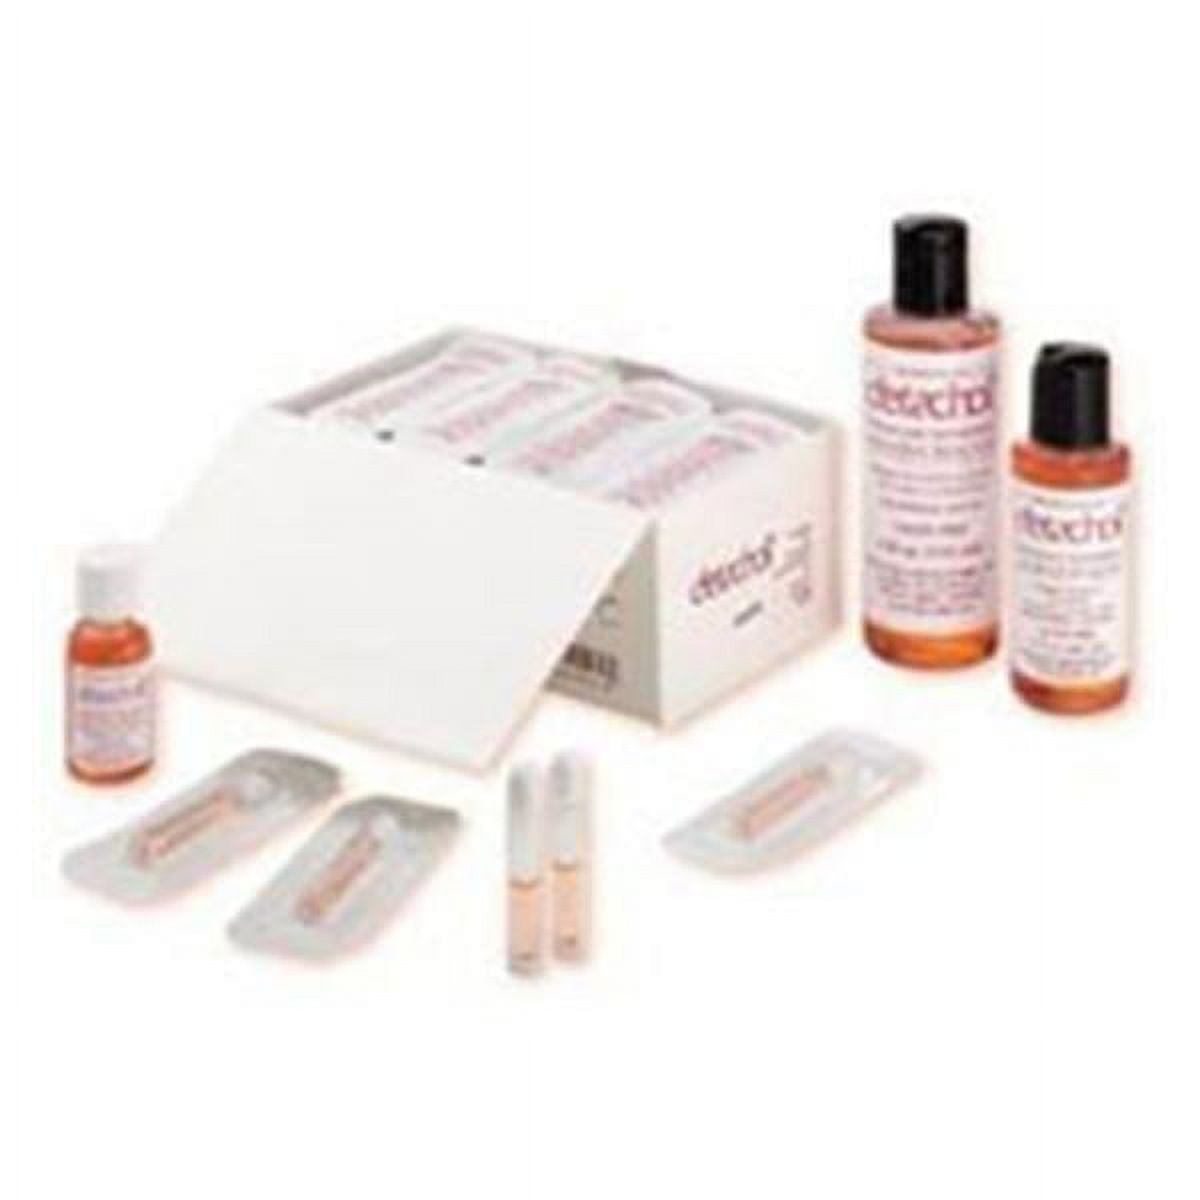 Detachol® Adhesive Remover 2/3cc Vial, Non-Irritating - Box of 48